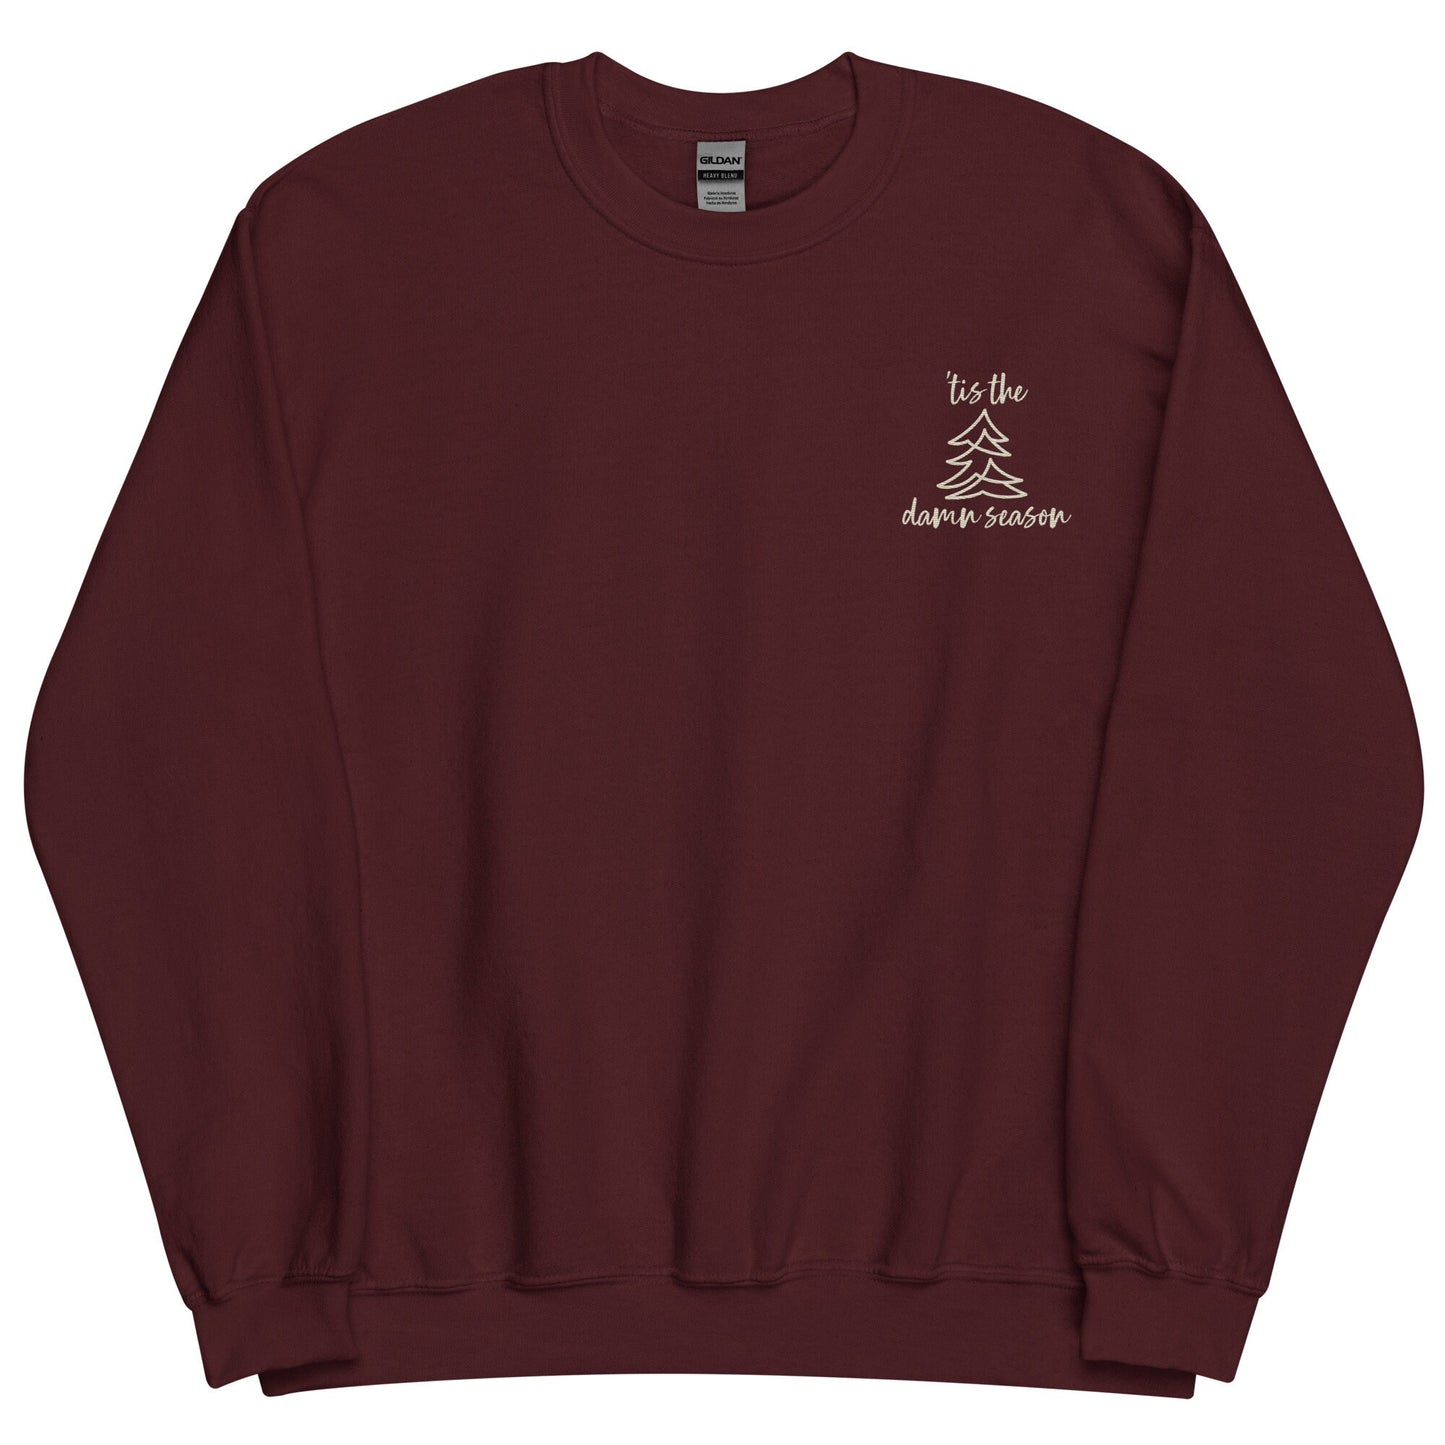 Taylor Swift 'Tis the Damn Season Embroidered Sweatshirt - Cozy Holiday Gift for Music Lovers | Taylor Swift Crewneck Sweatshirt